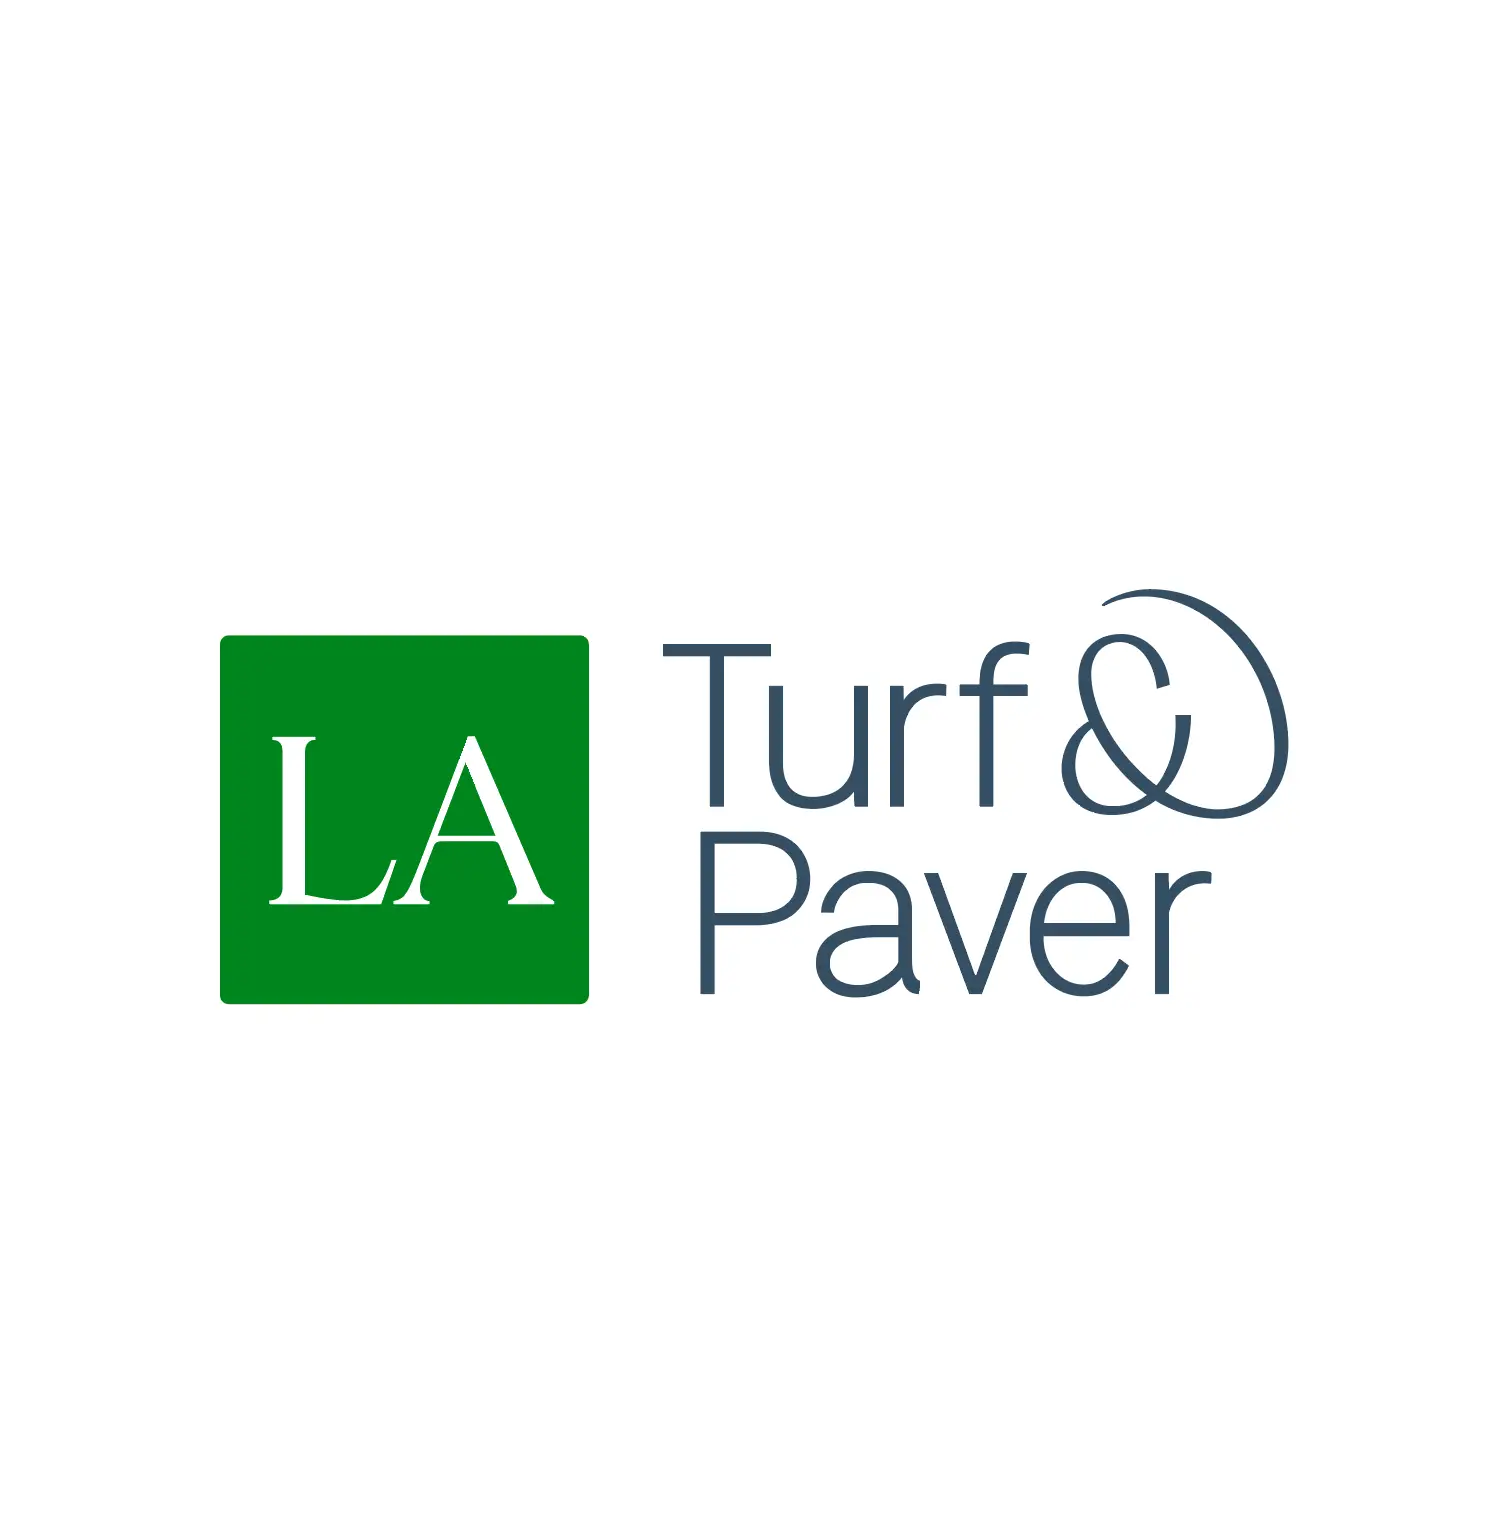 la turf and paver white logo background small